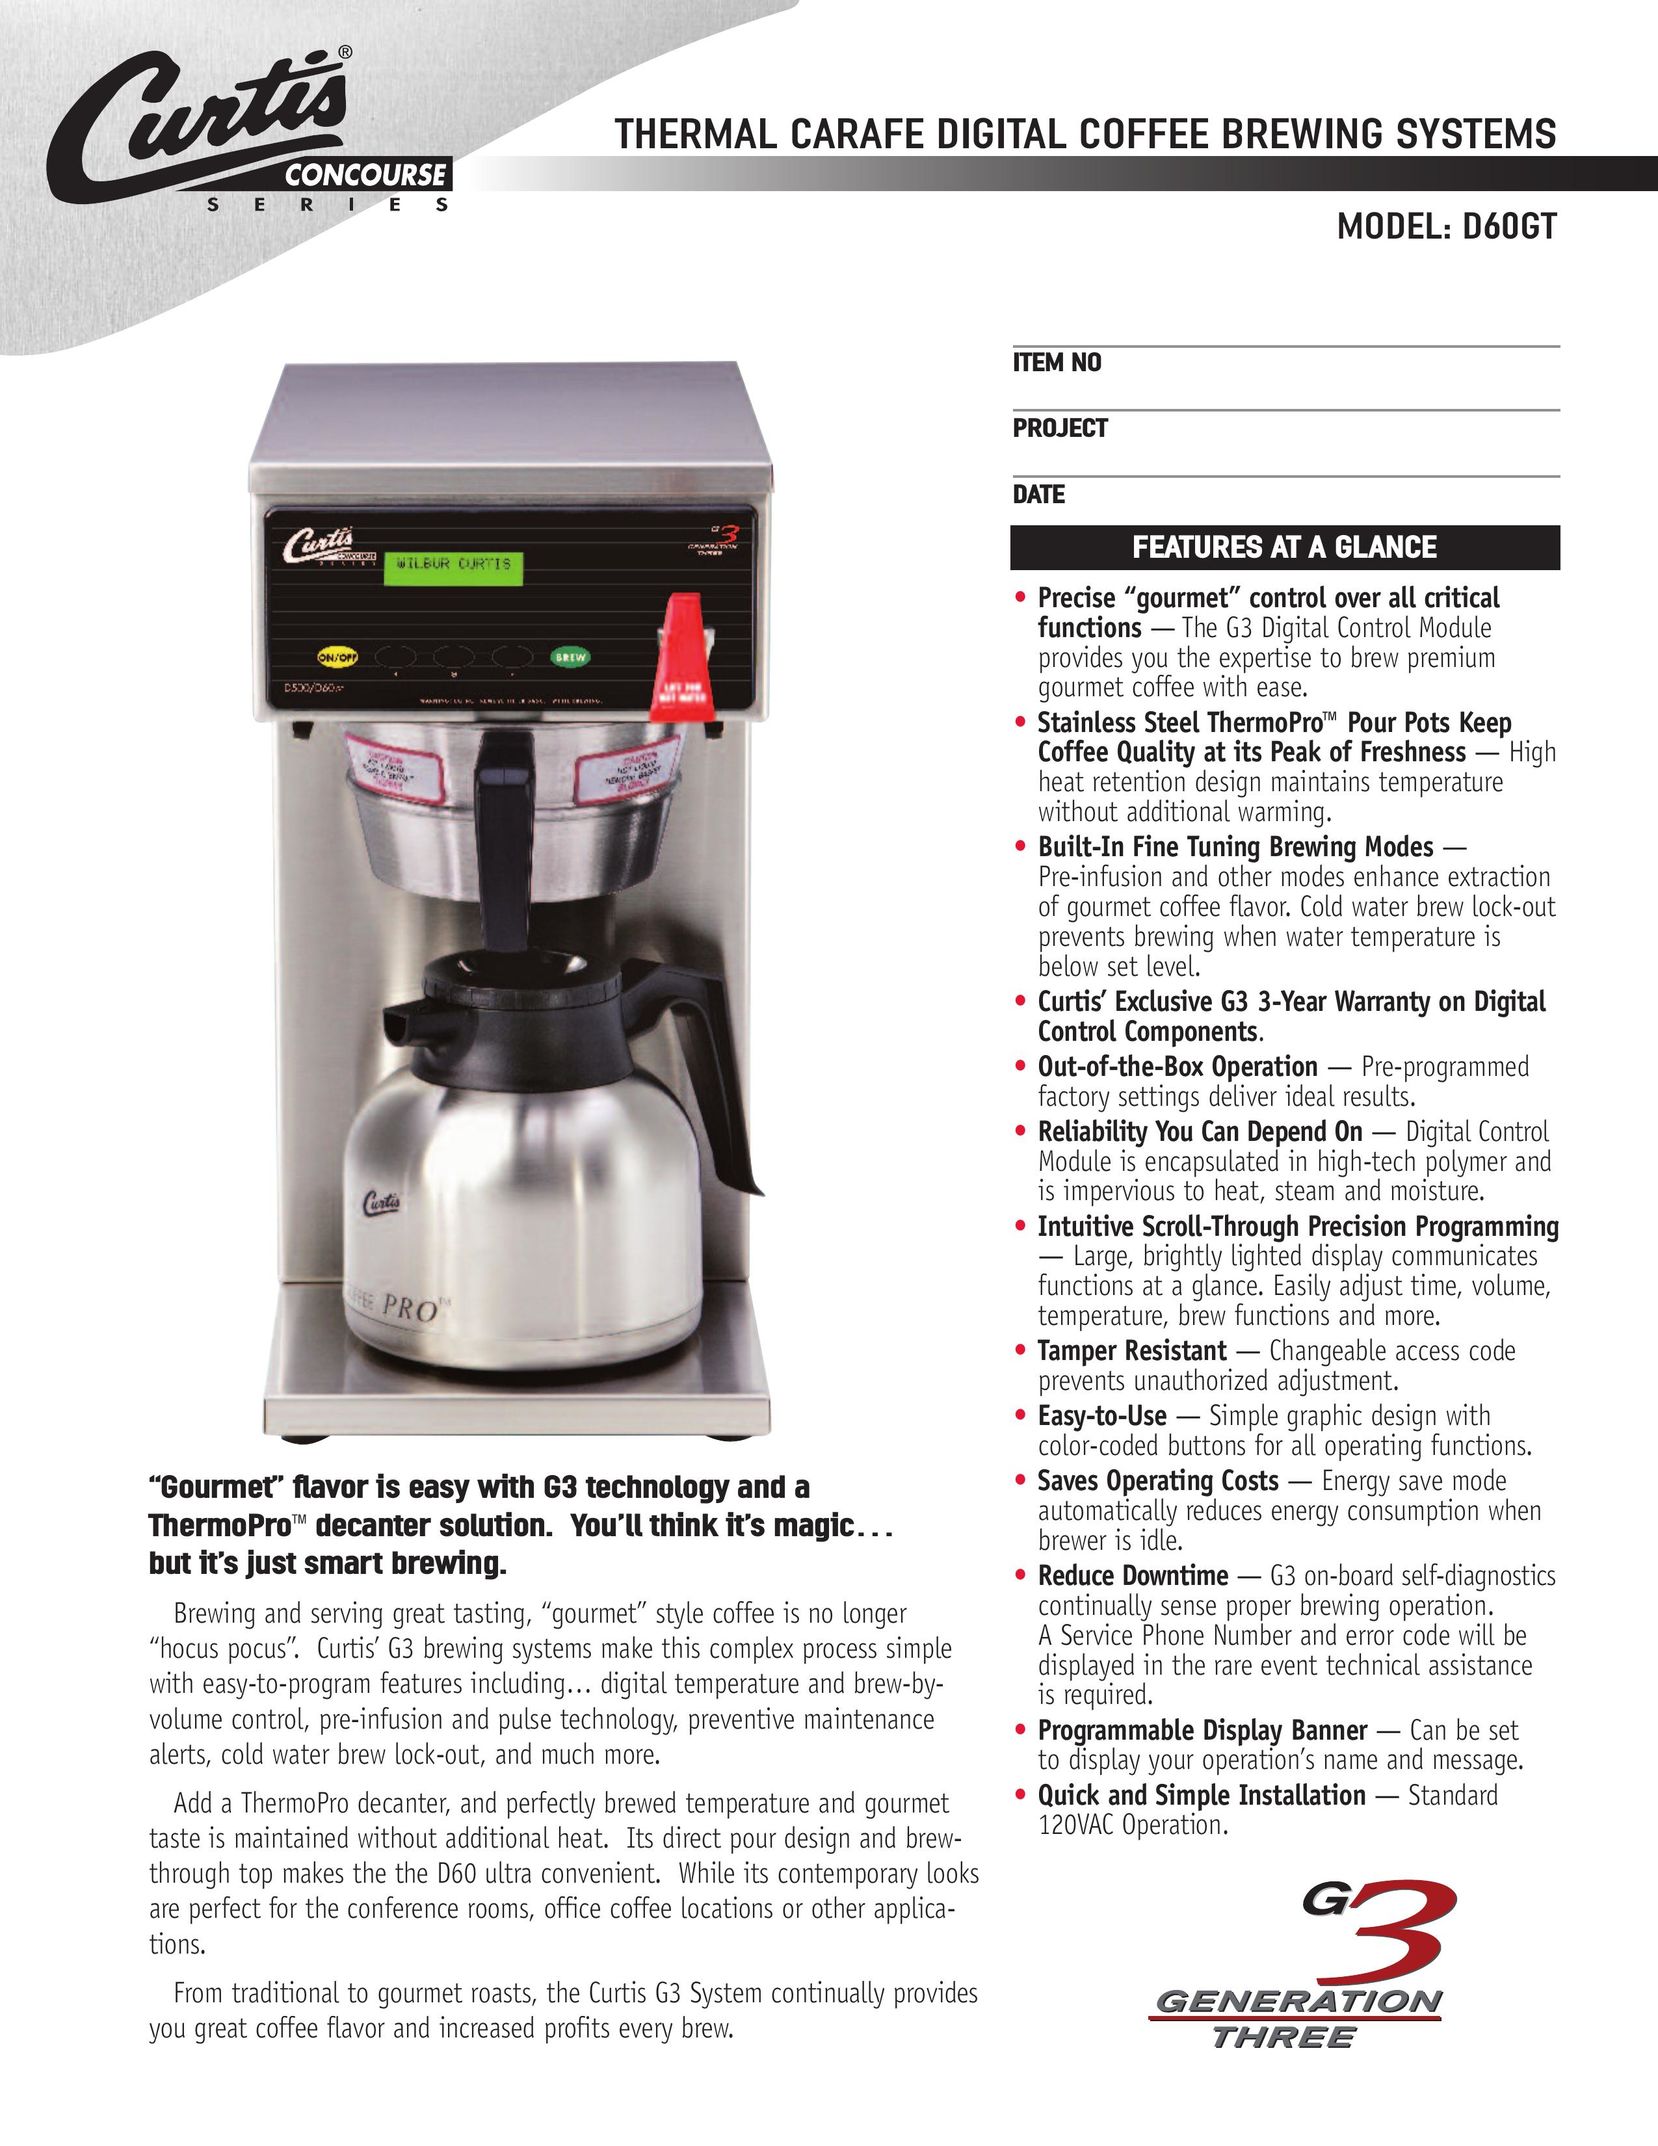 Curtis D60GT Coffeemaker User Manual